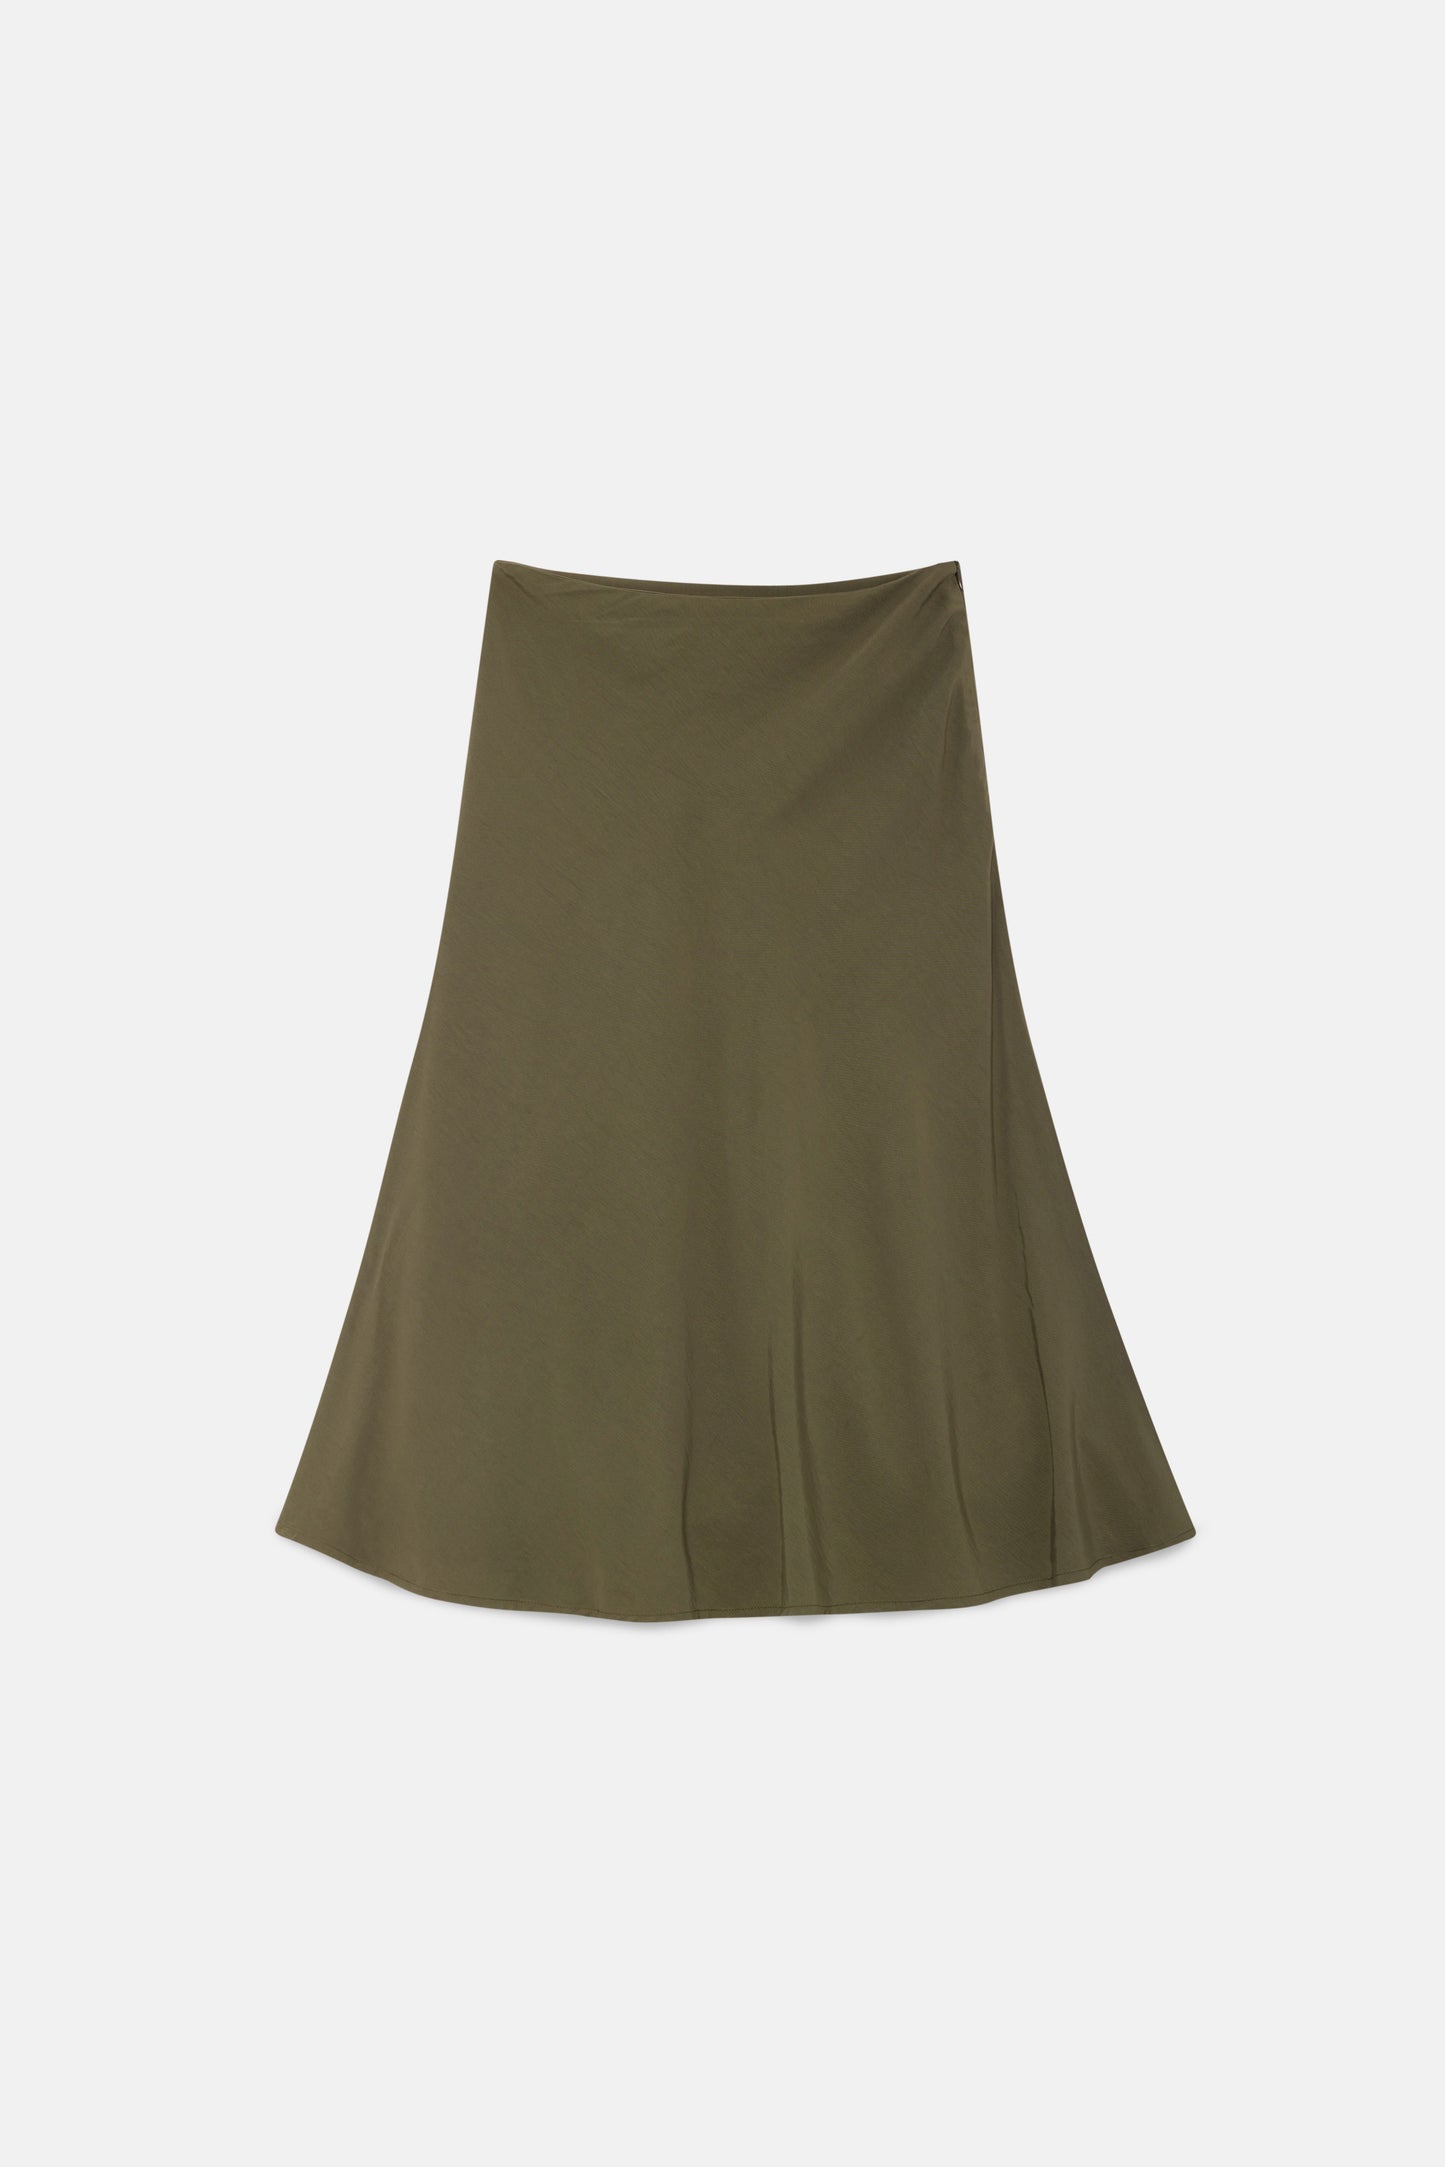 Green satin flared midi skirt